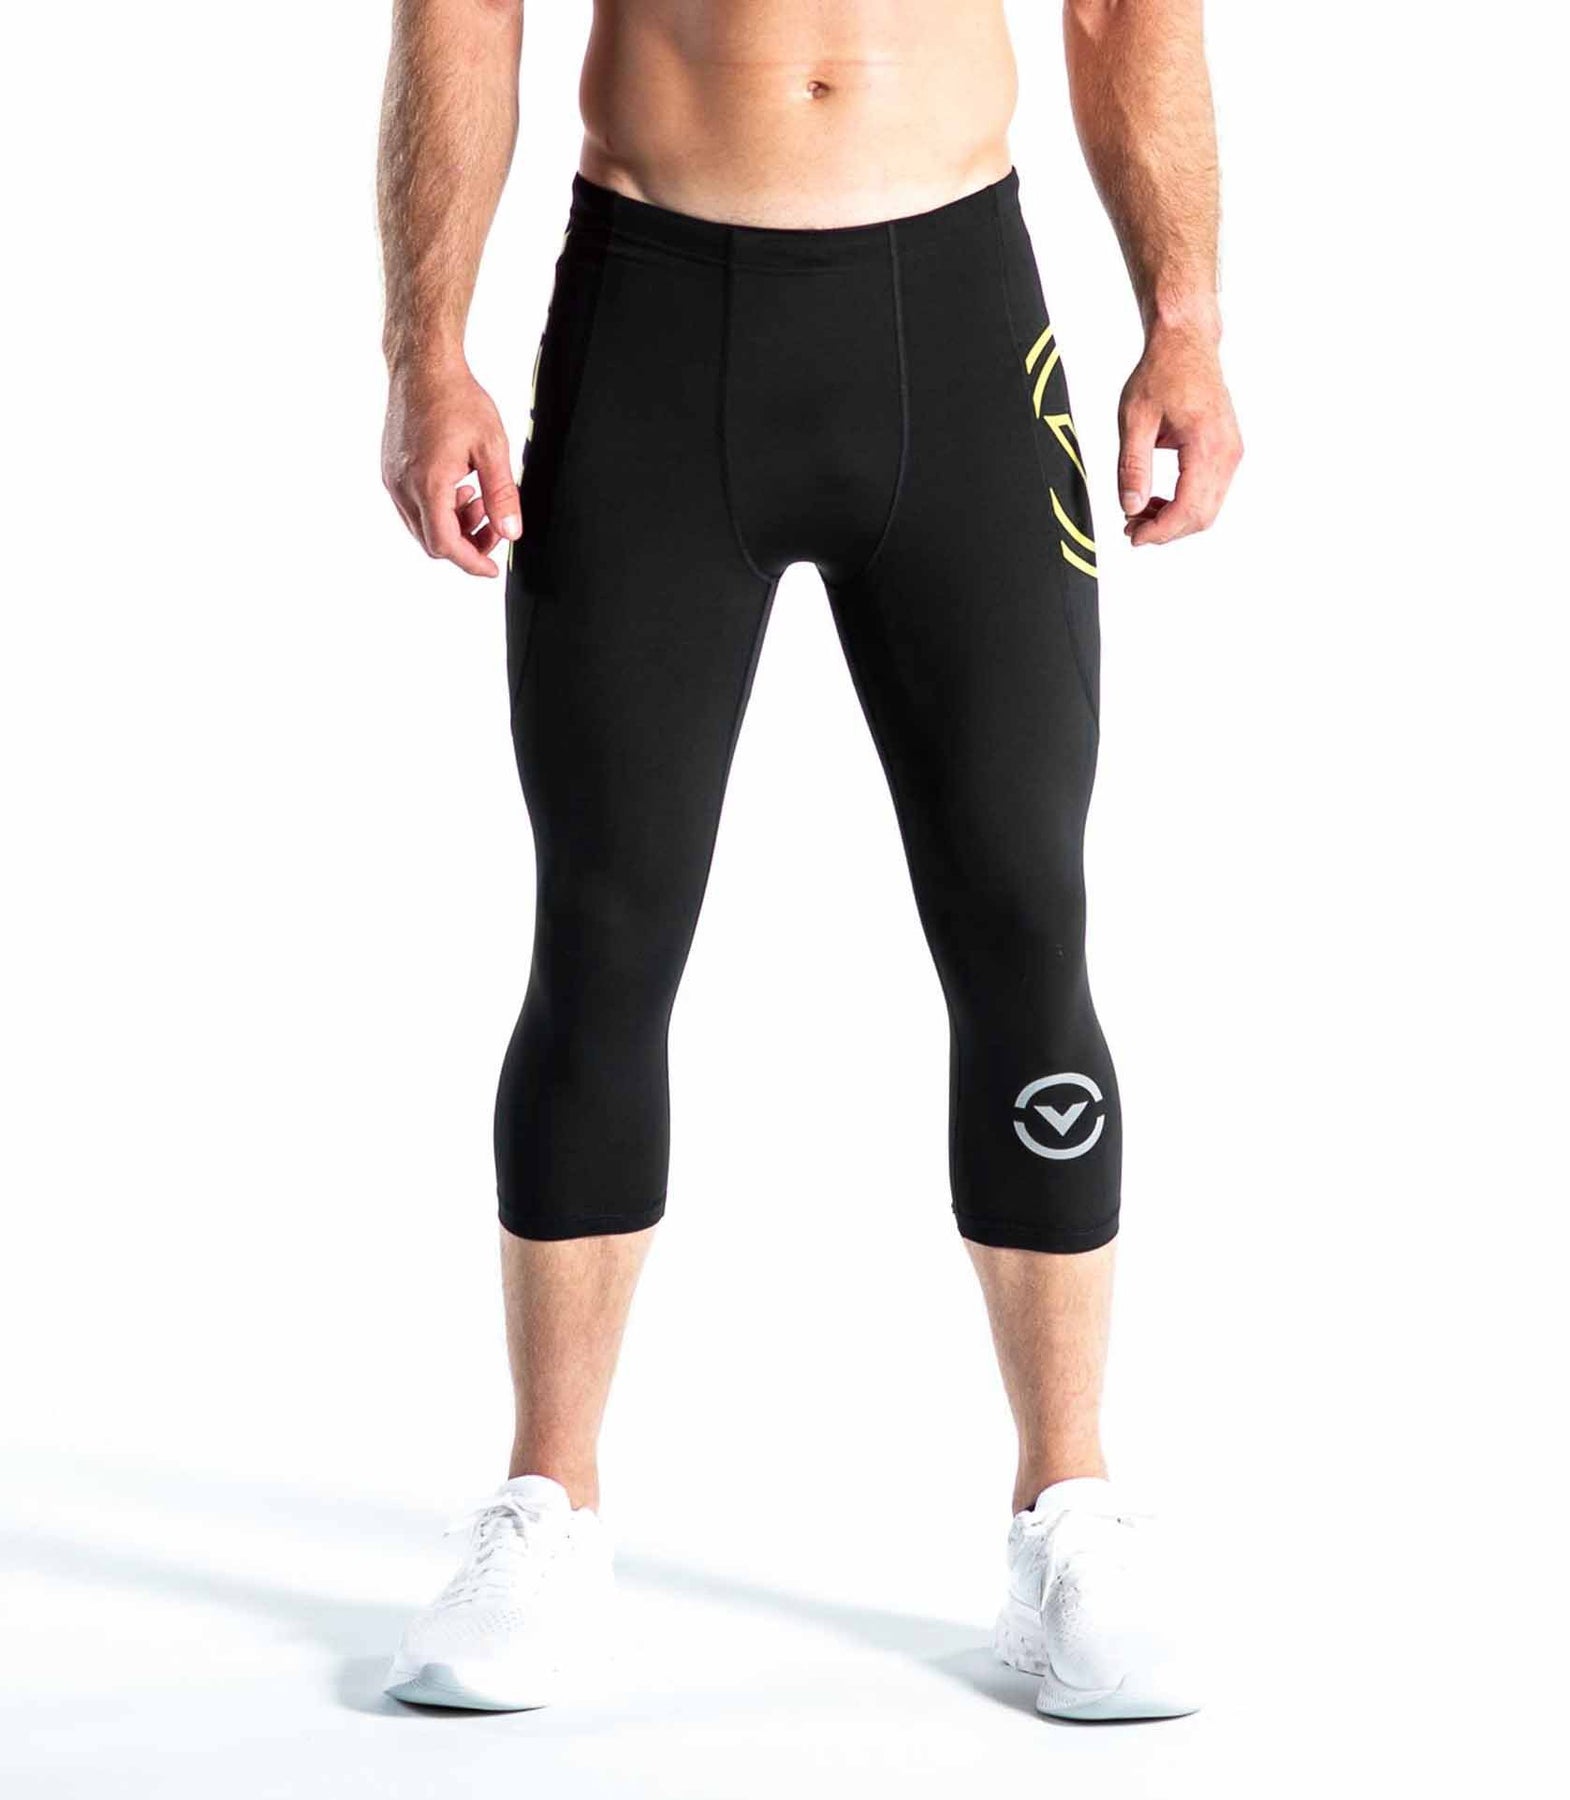 VIRUS Men's Stay Cool Tech 3/4 Length Compression Pants, Black